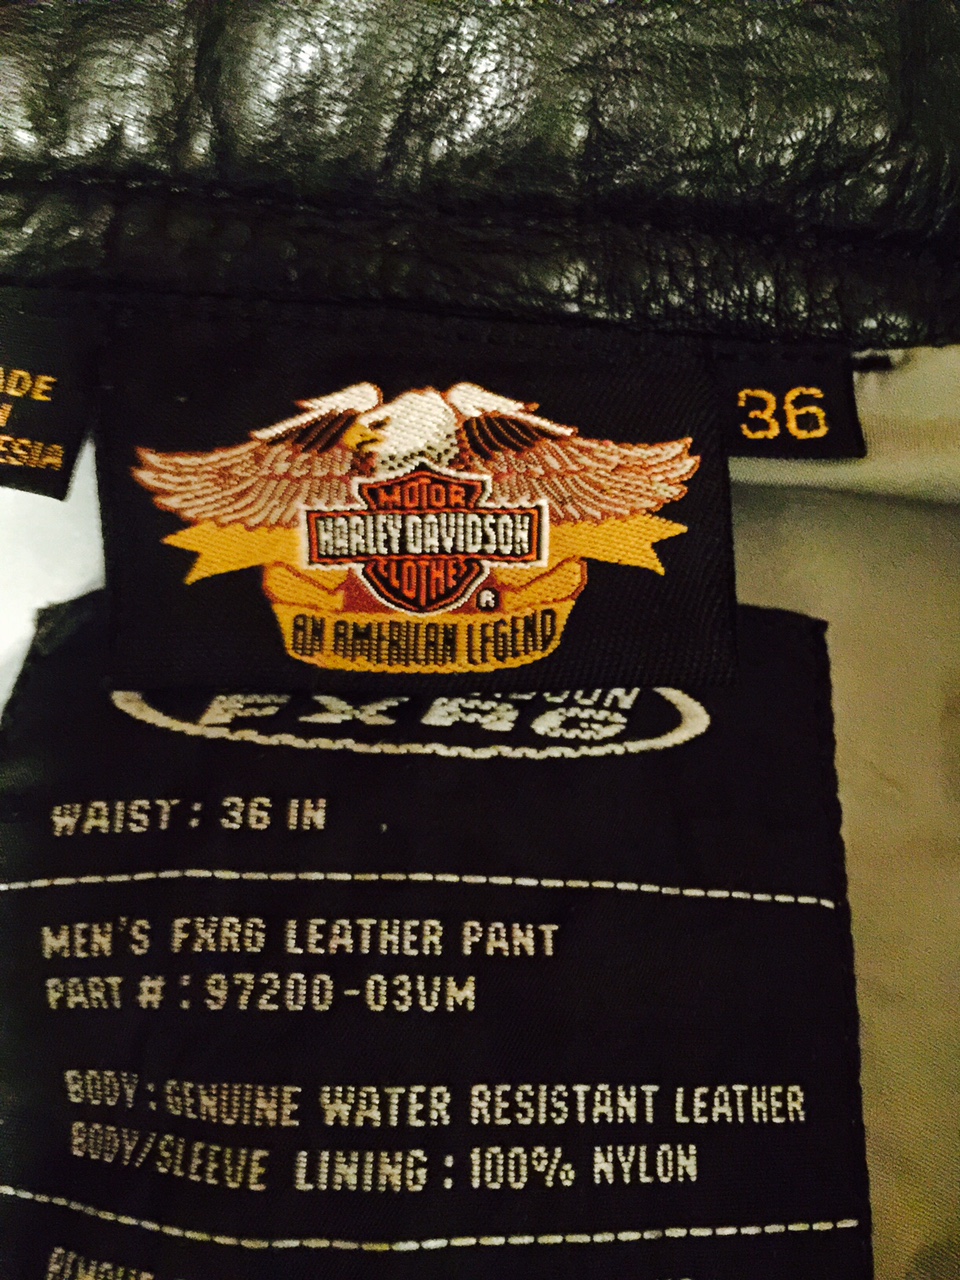 HARLEY DAVIDSON FXRG Leather PANTS, 30328